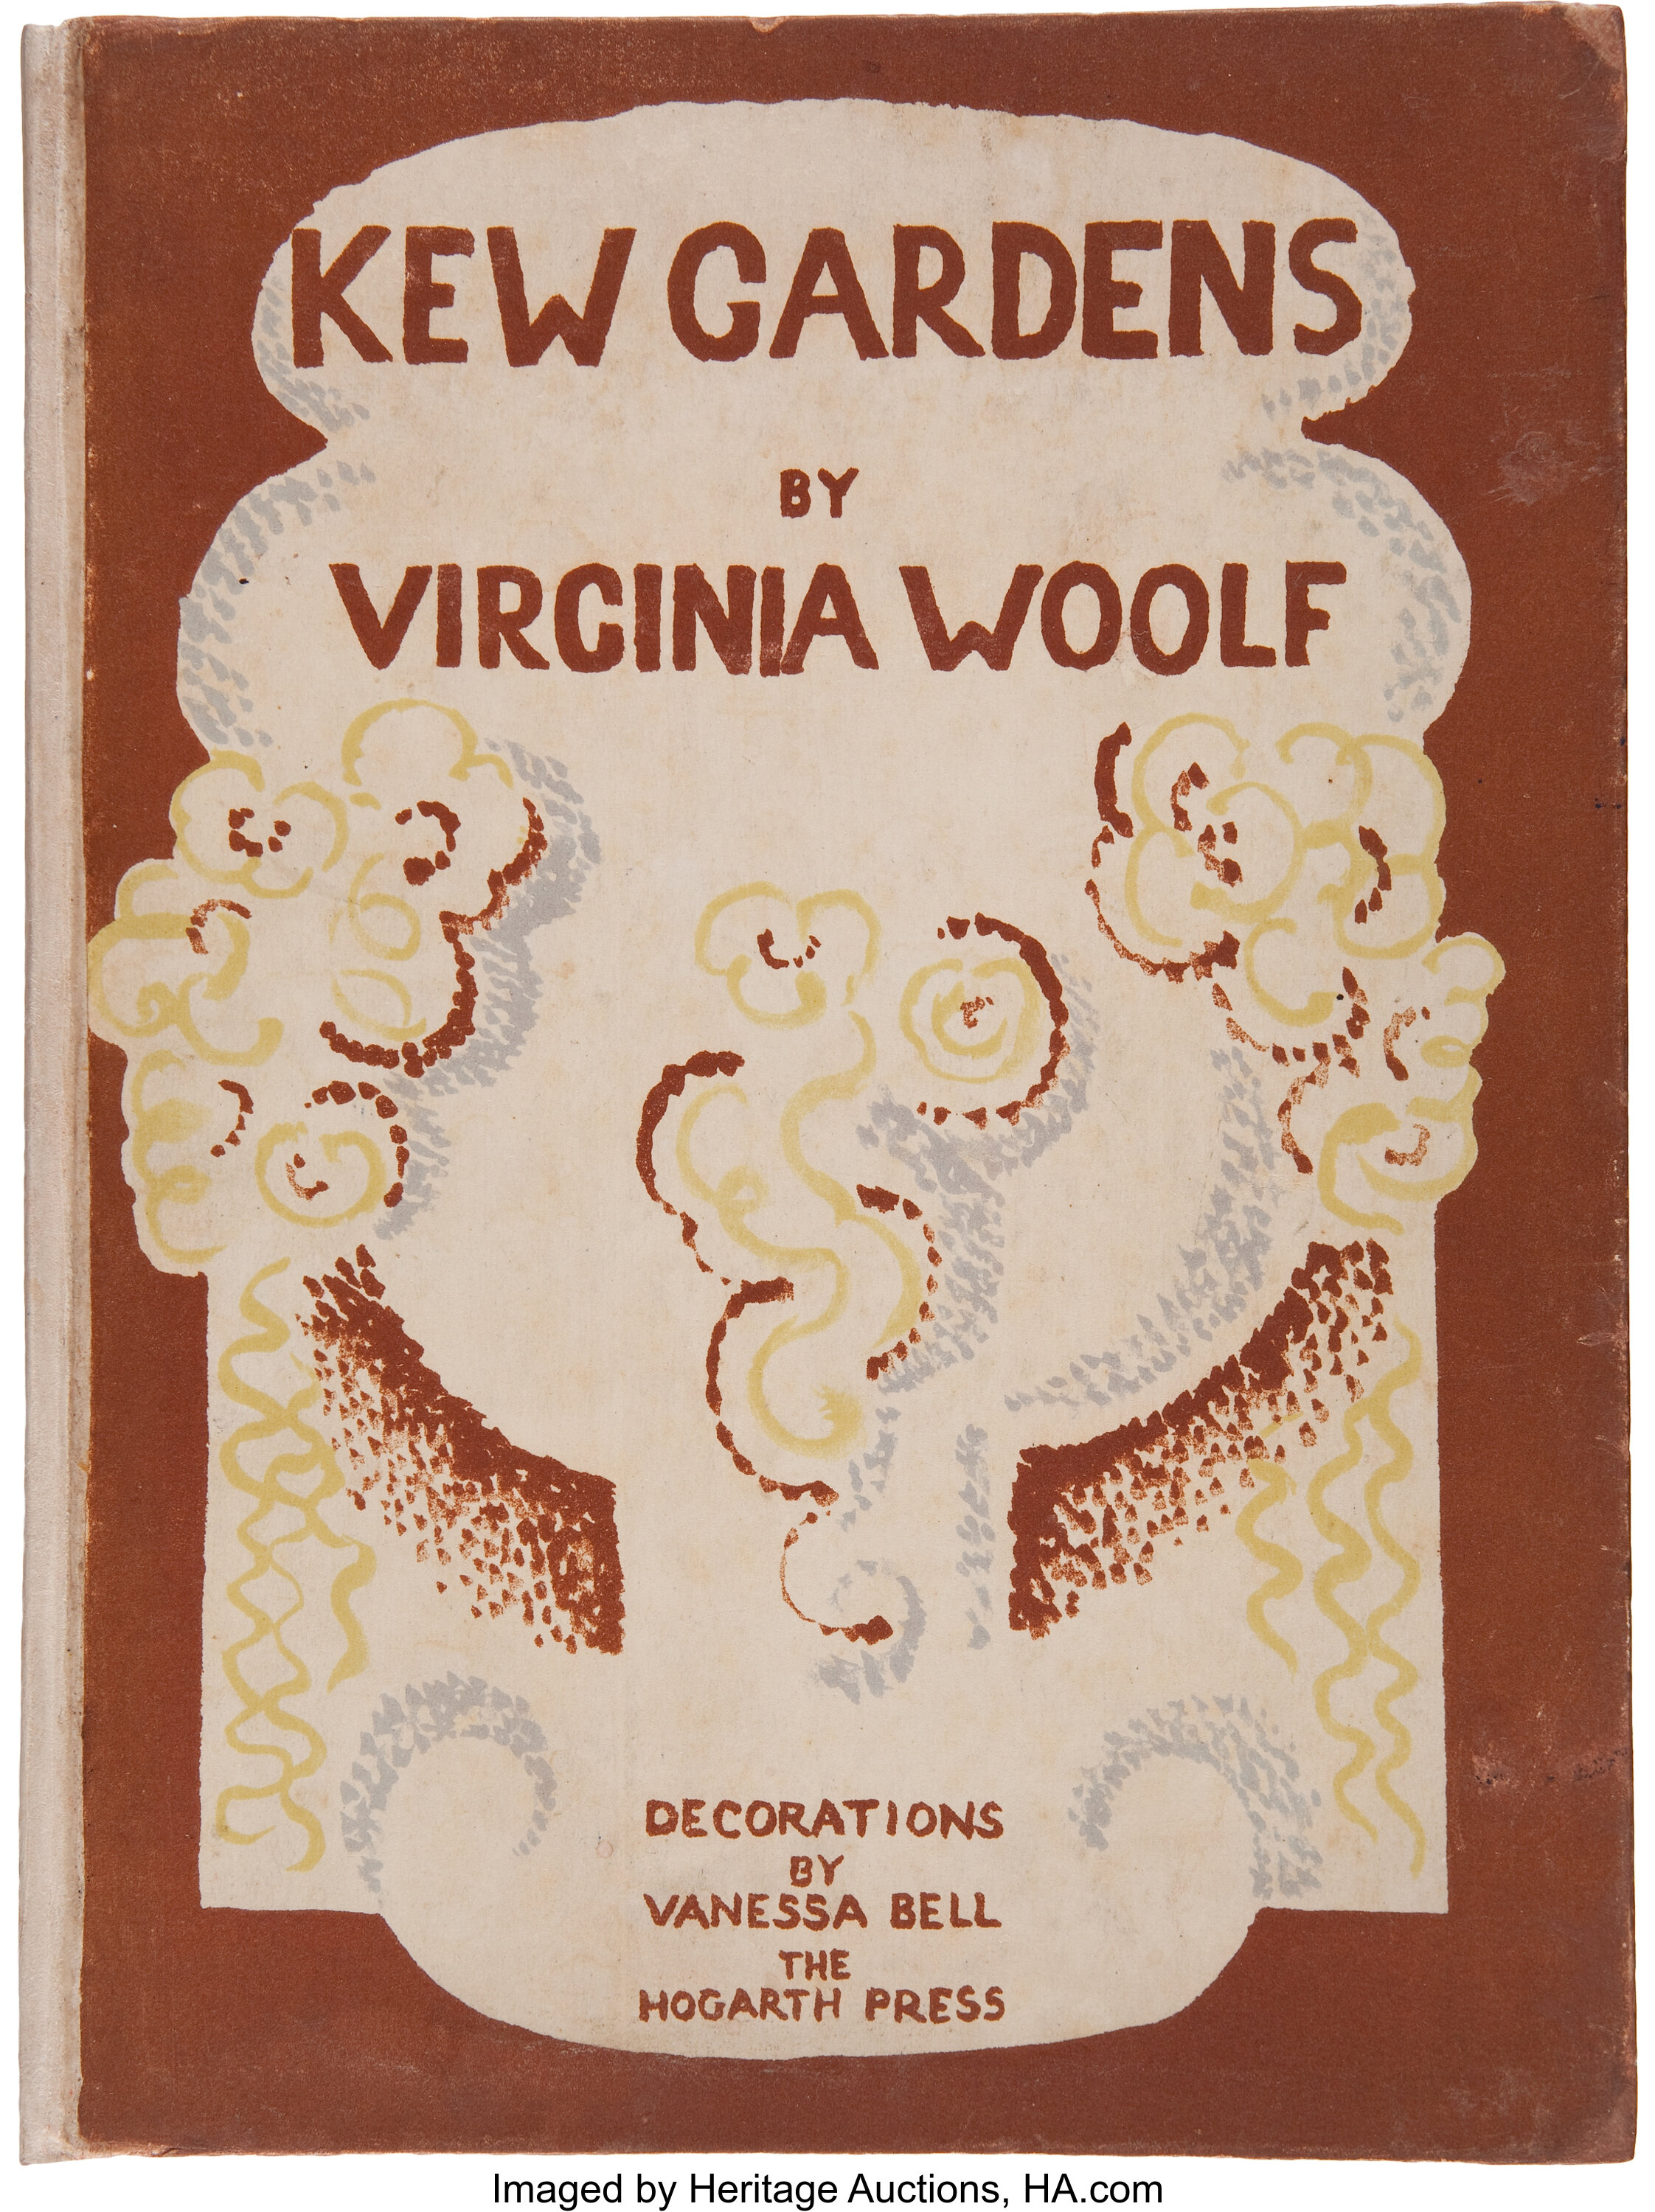 Virginia Woolf Kew Gardens Decorated By Vanessa Bell London